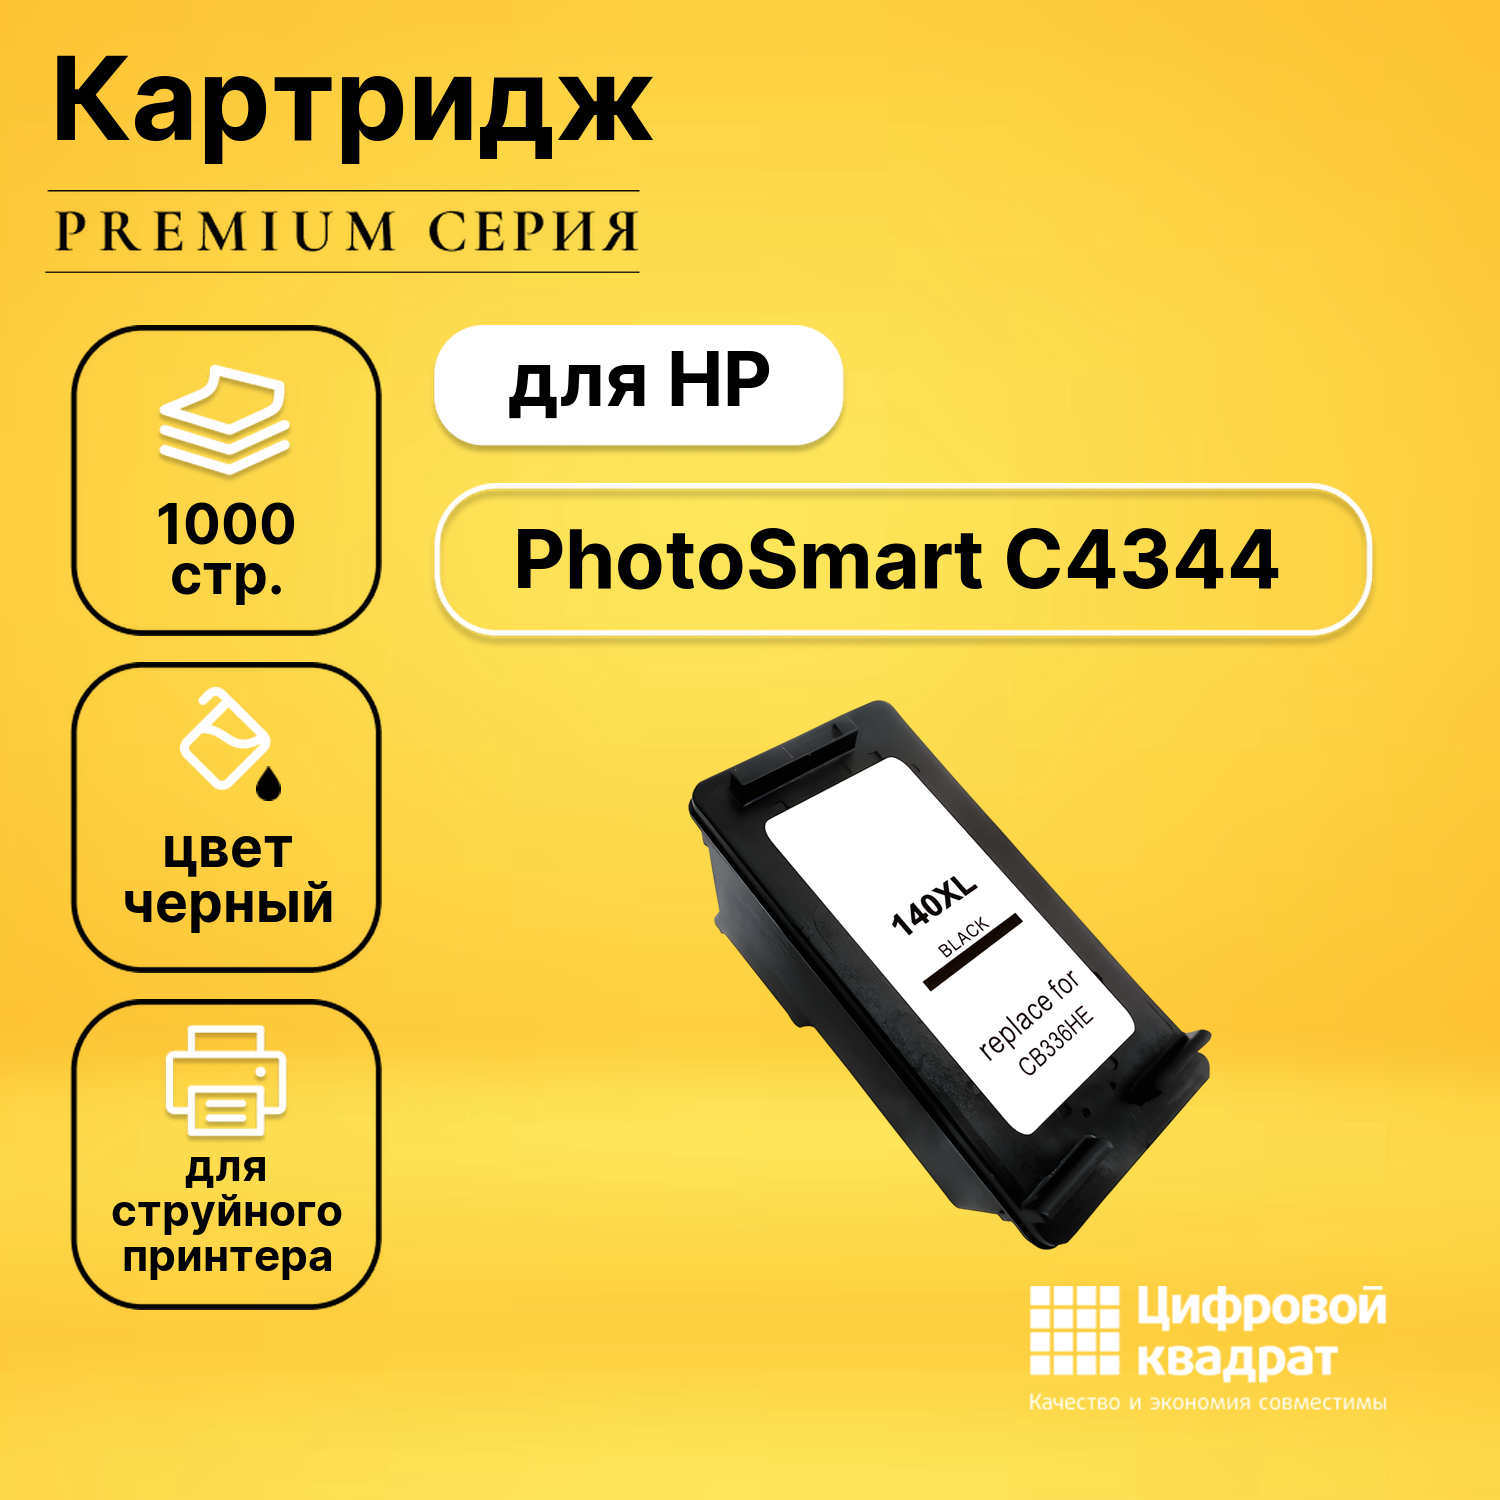 Картридж DS для HP PhotoSmart C4344 совместимый